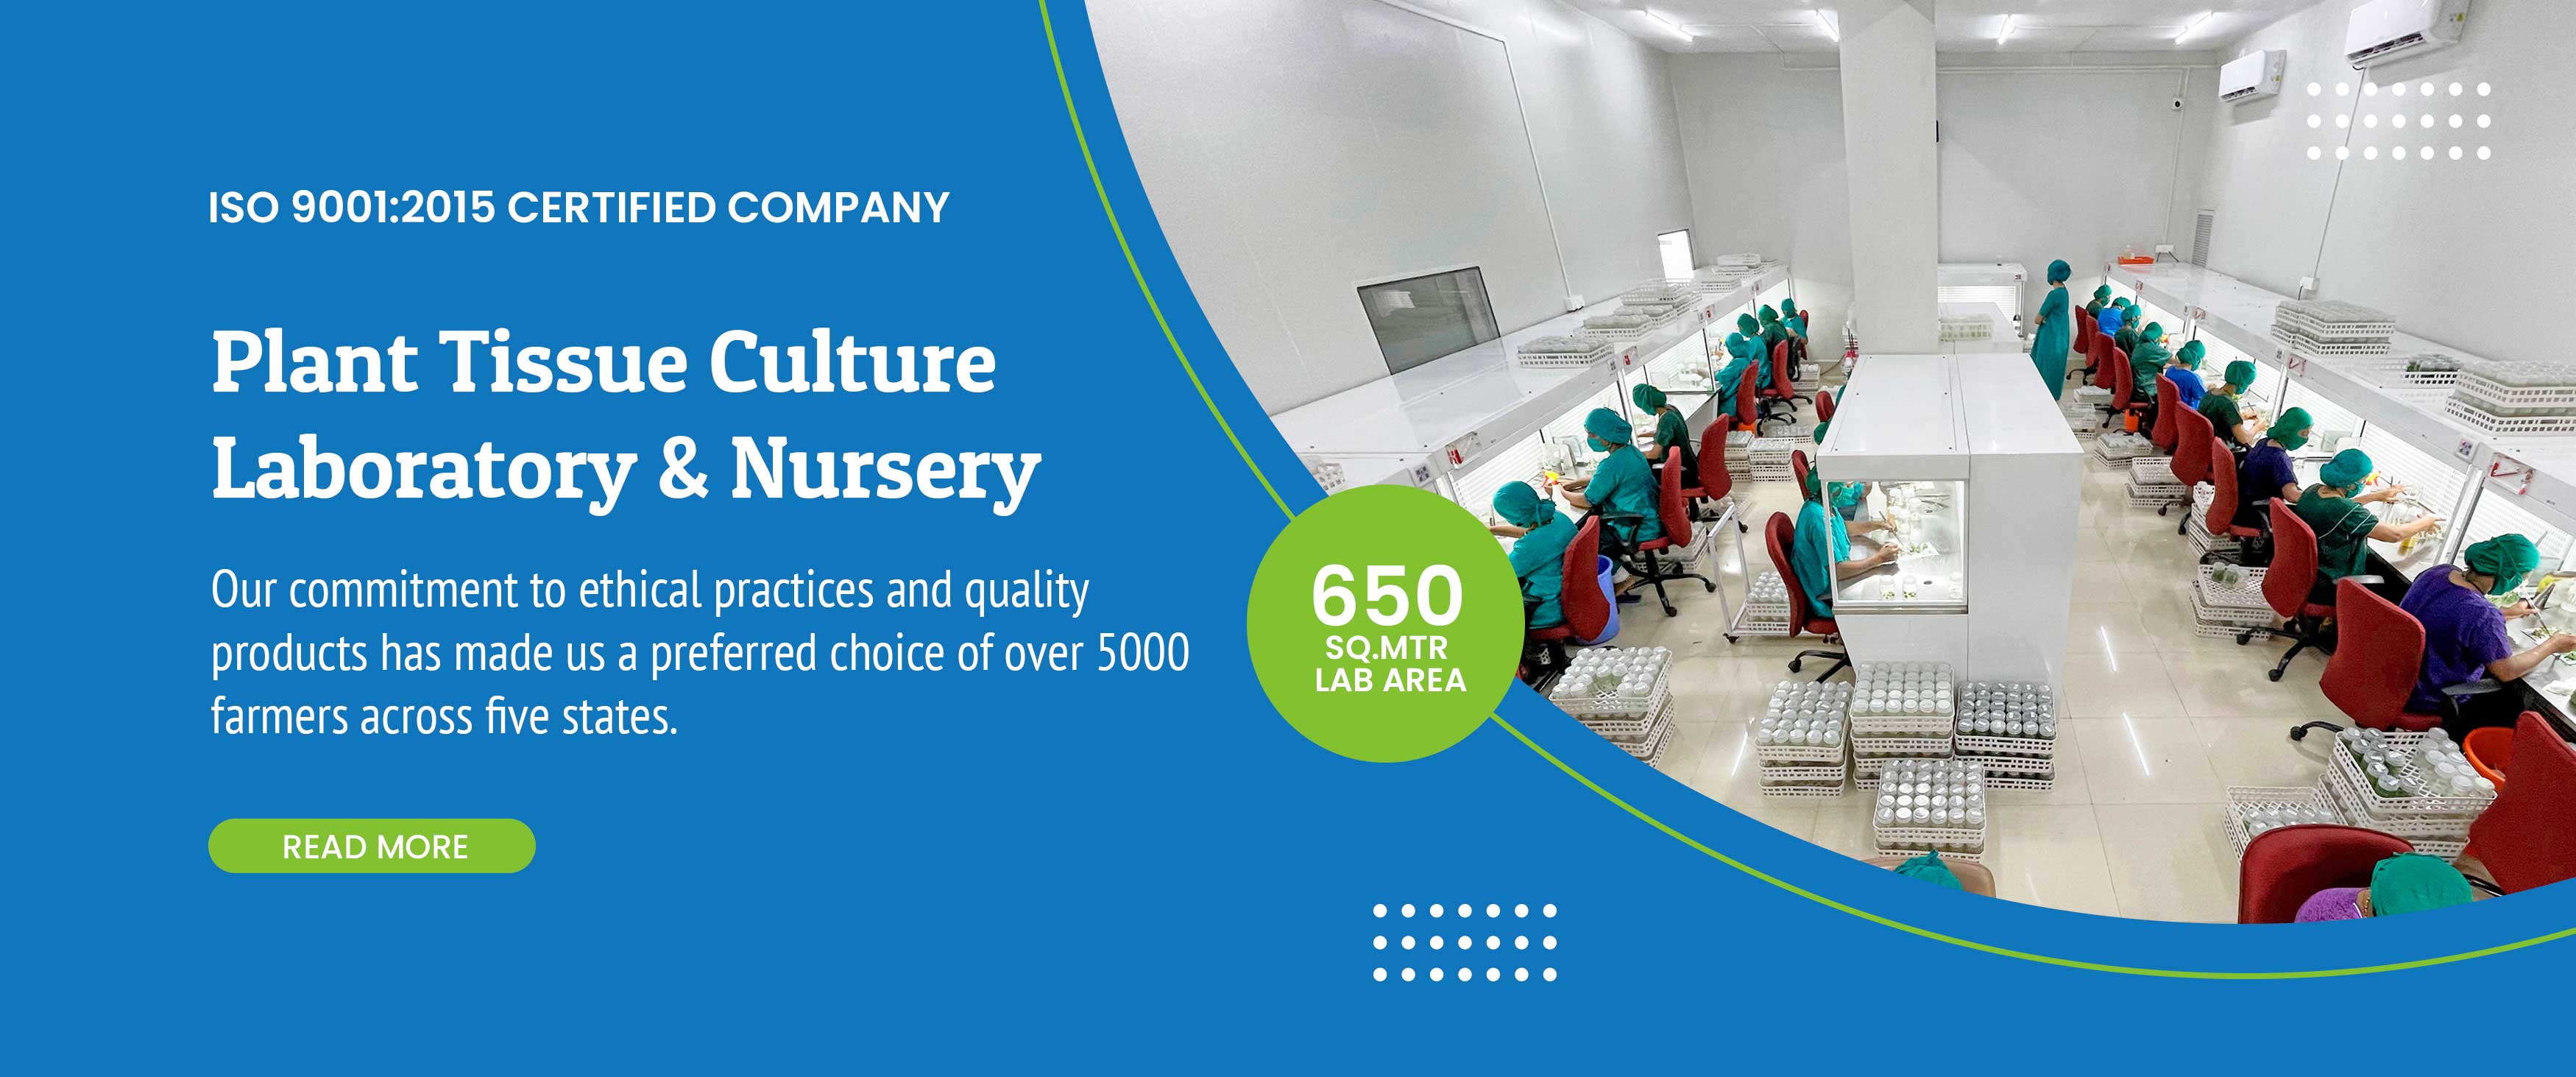 Plant Tissue Culture Laboratory & Nursery in India